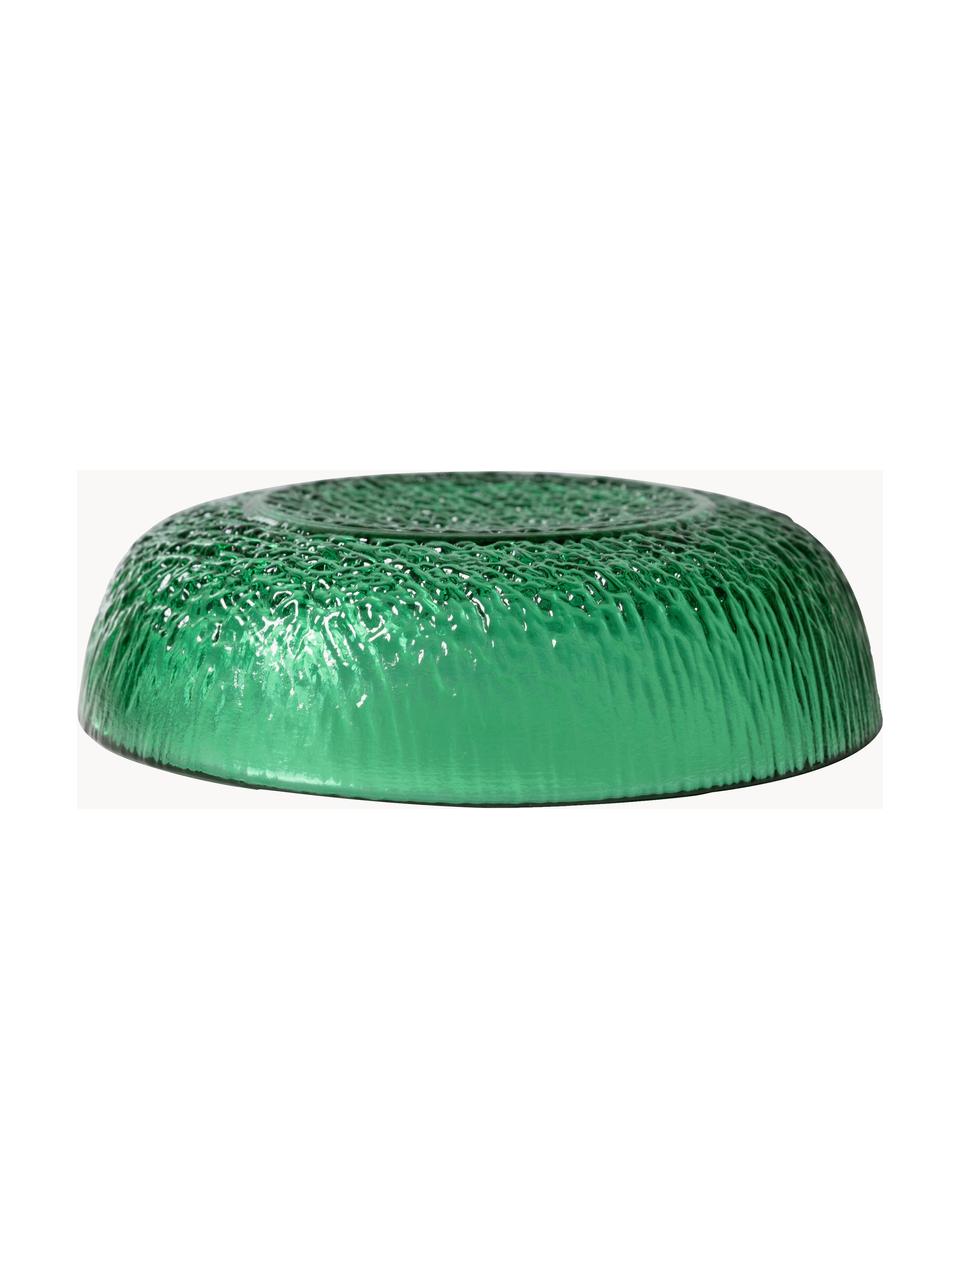 Ciotola immersione in vetro The Emeralds 2 pz, Vetro, Verde trasparente, Ø 13 cm